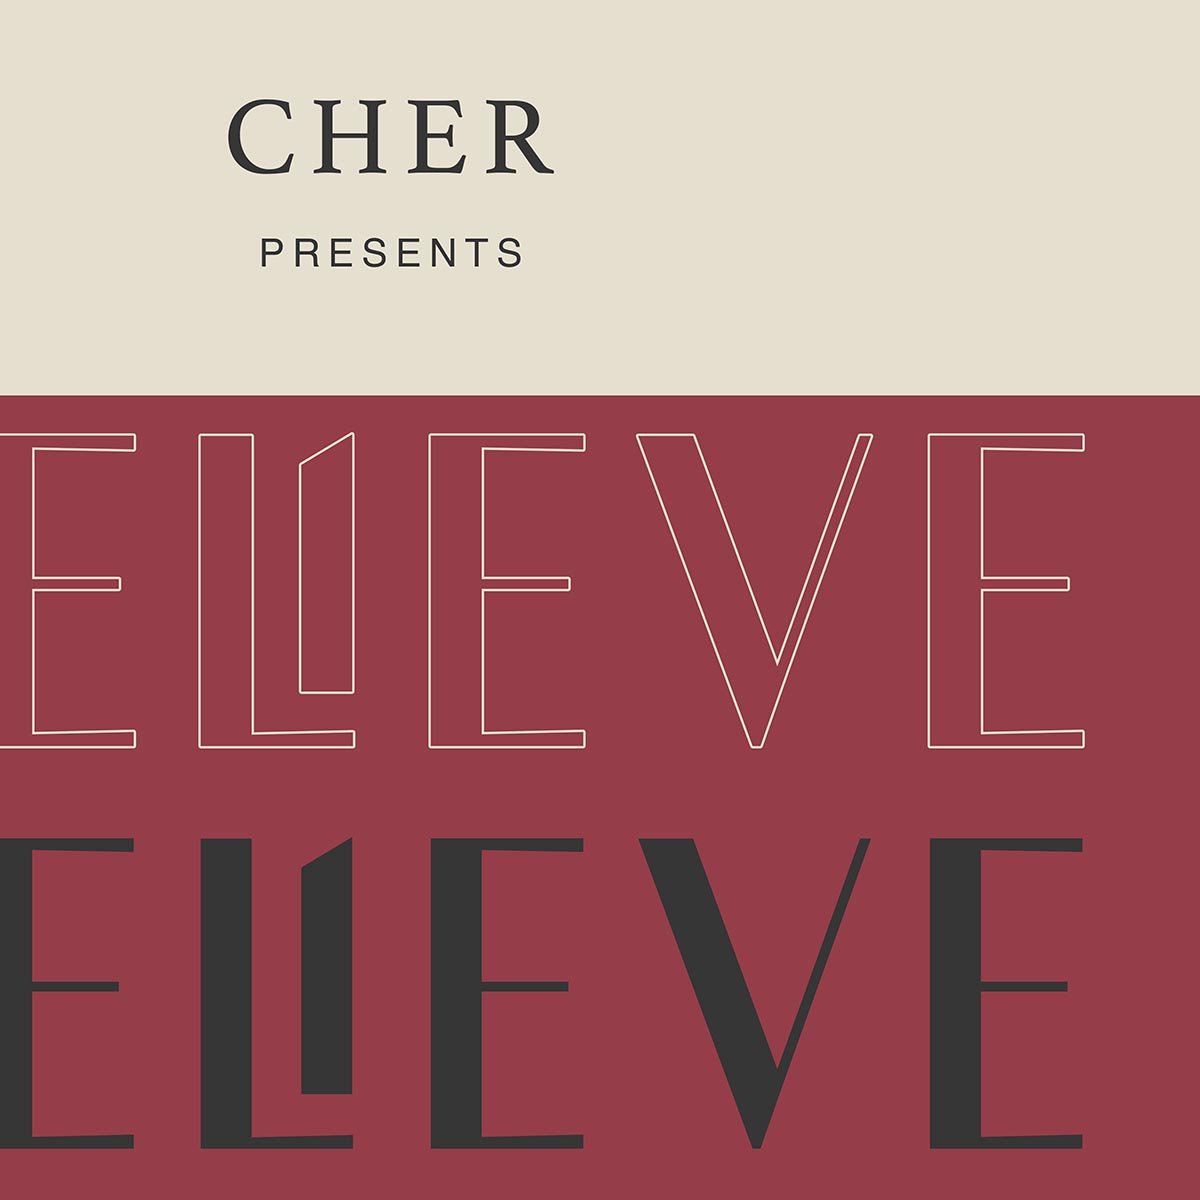 Believe by Cher